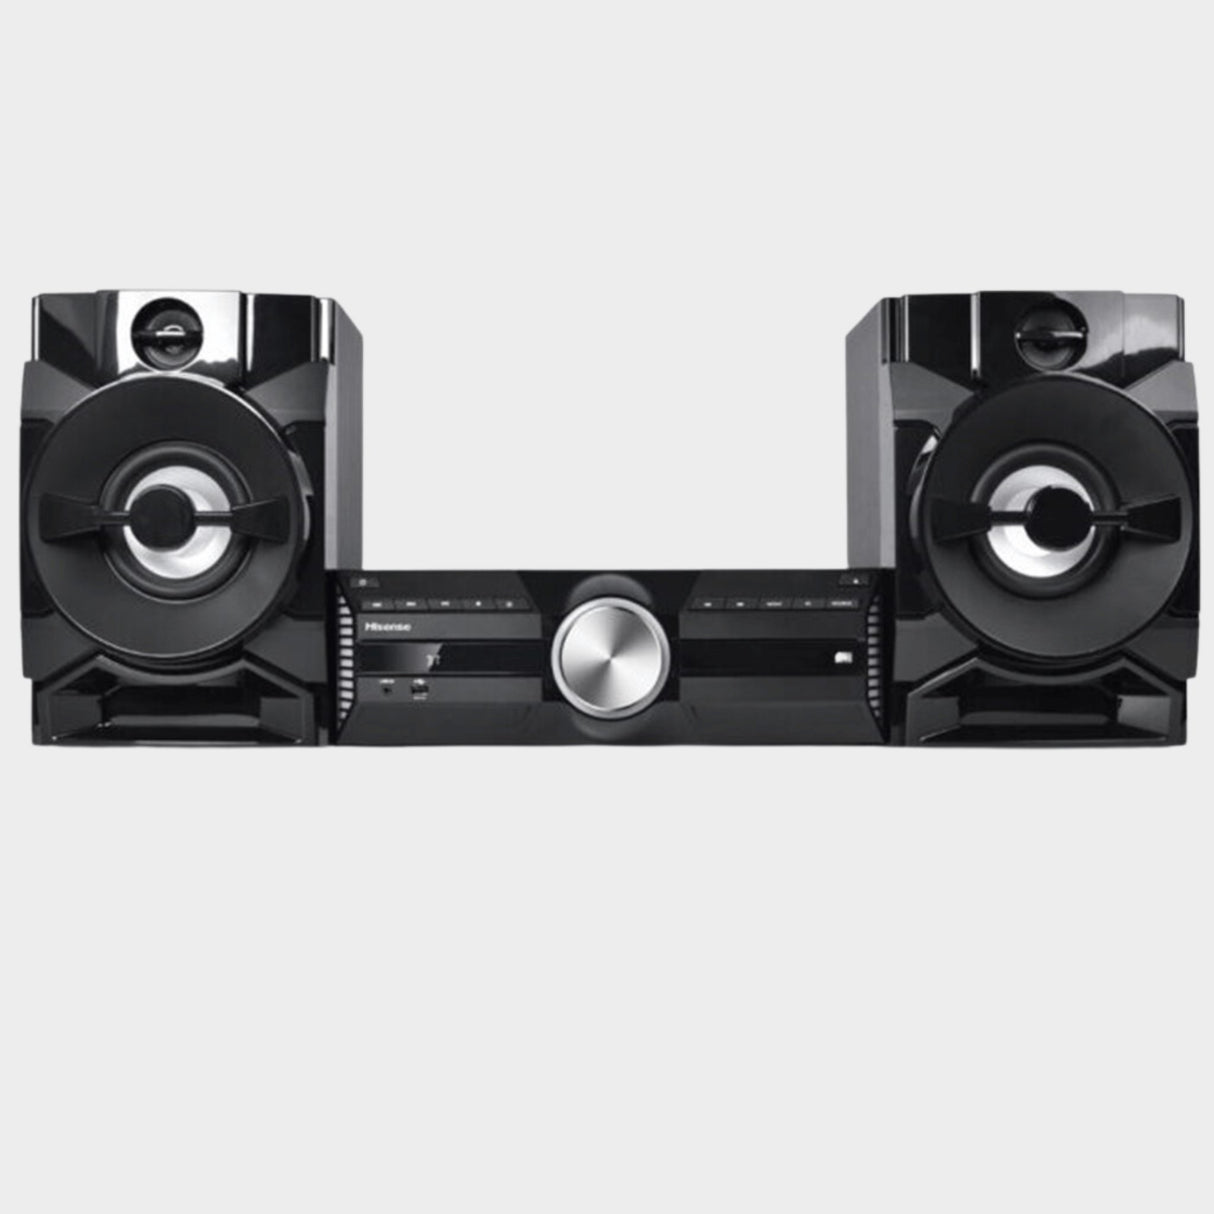 Hisense 360w Home Theater System, HA450M Hifi Speaker- Black